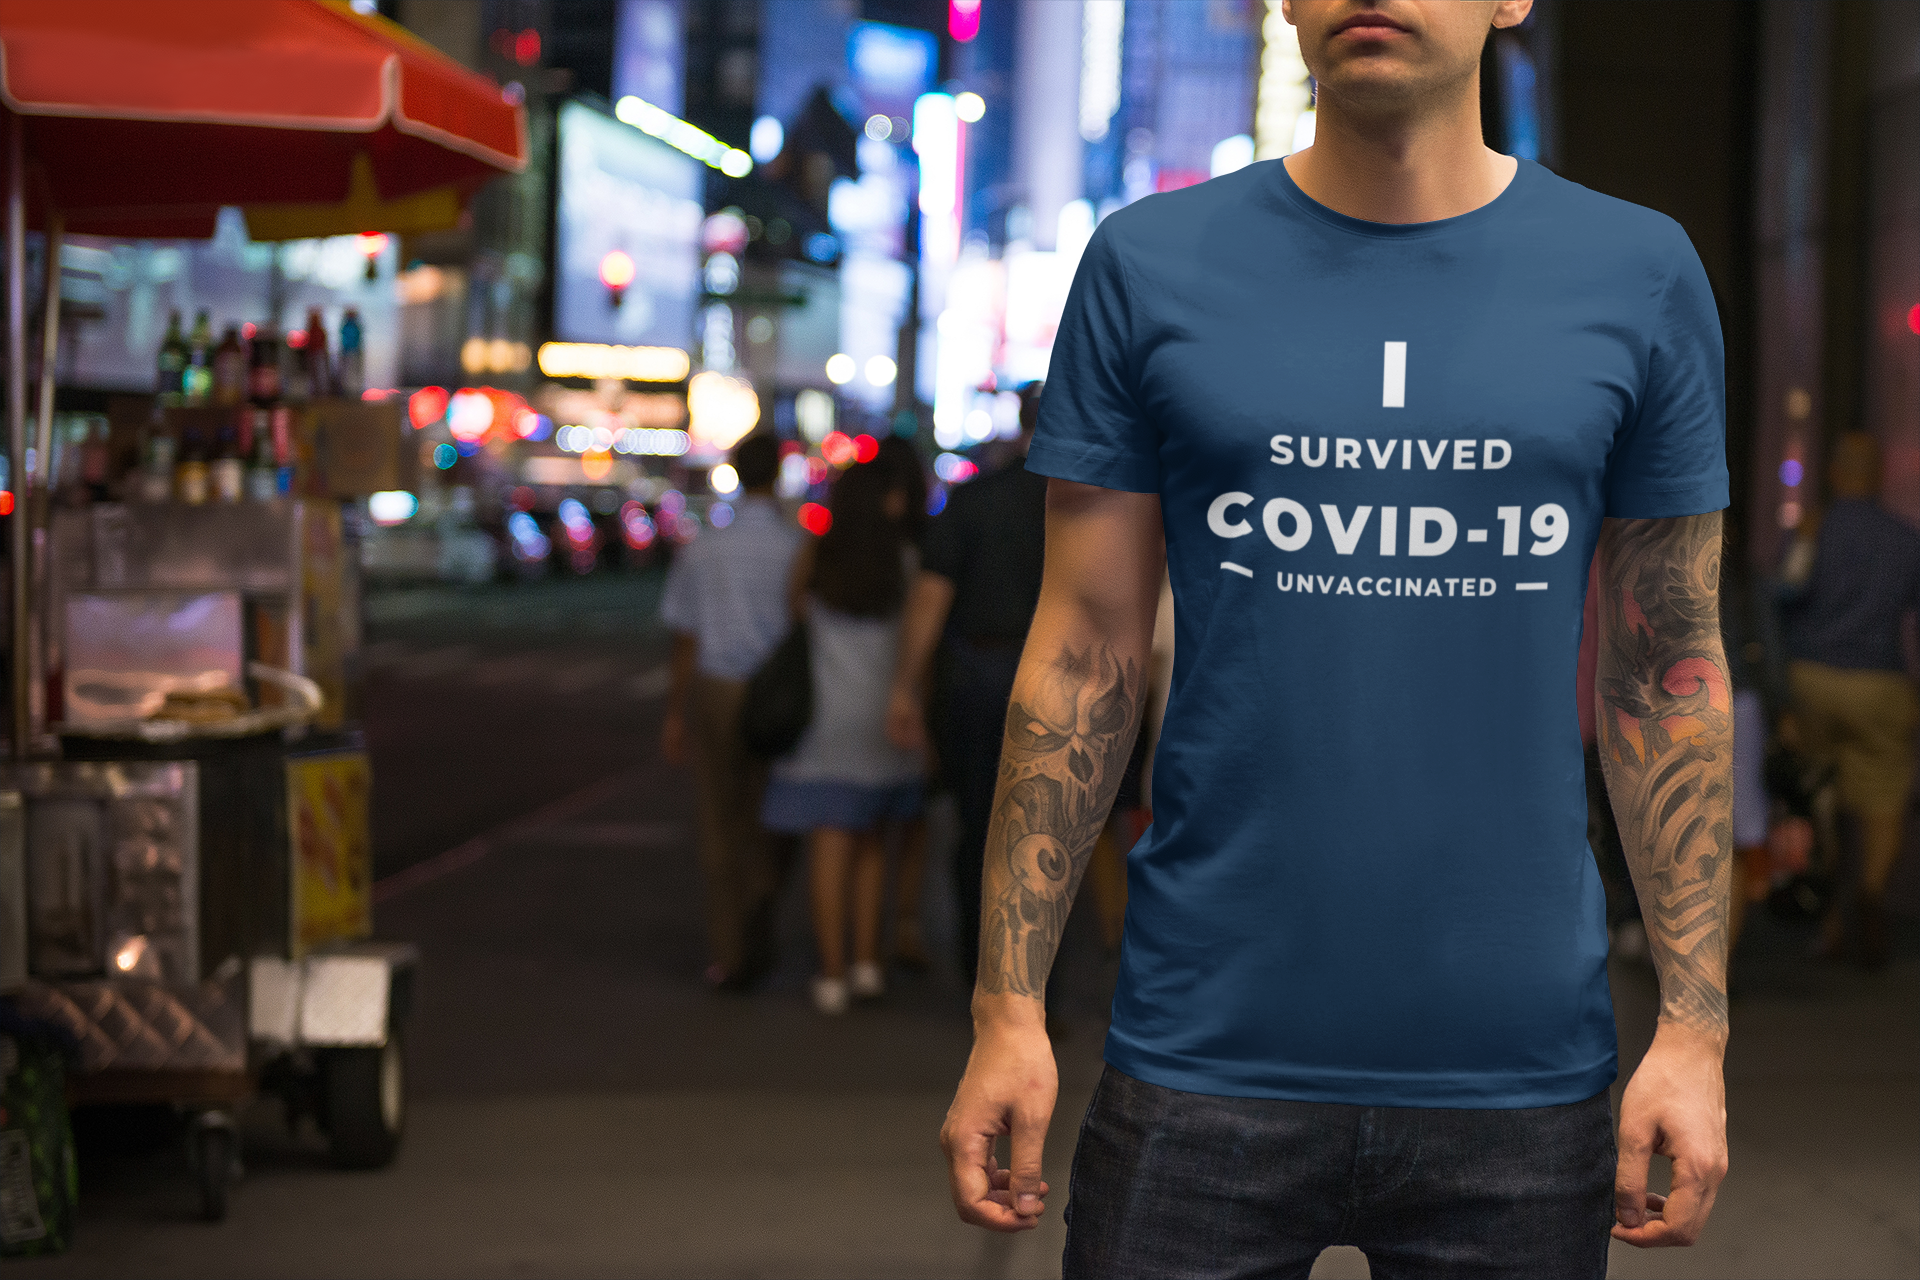 I Survived Covid-19 T-Shirt Men